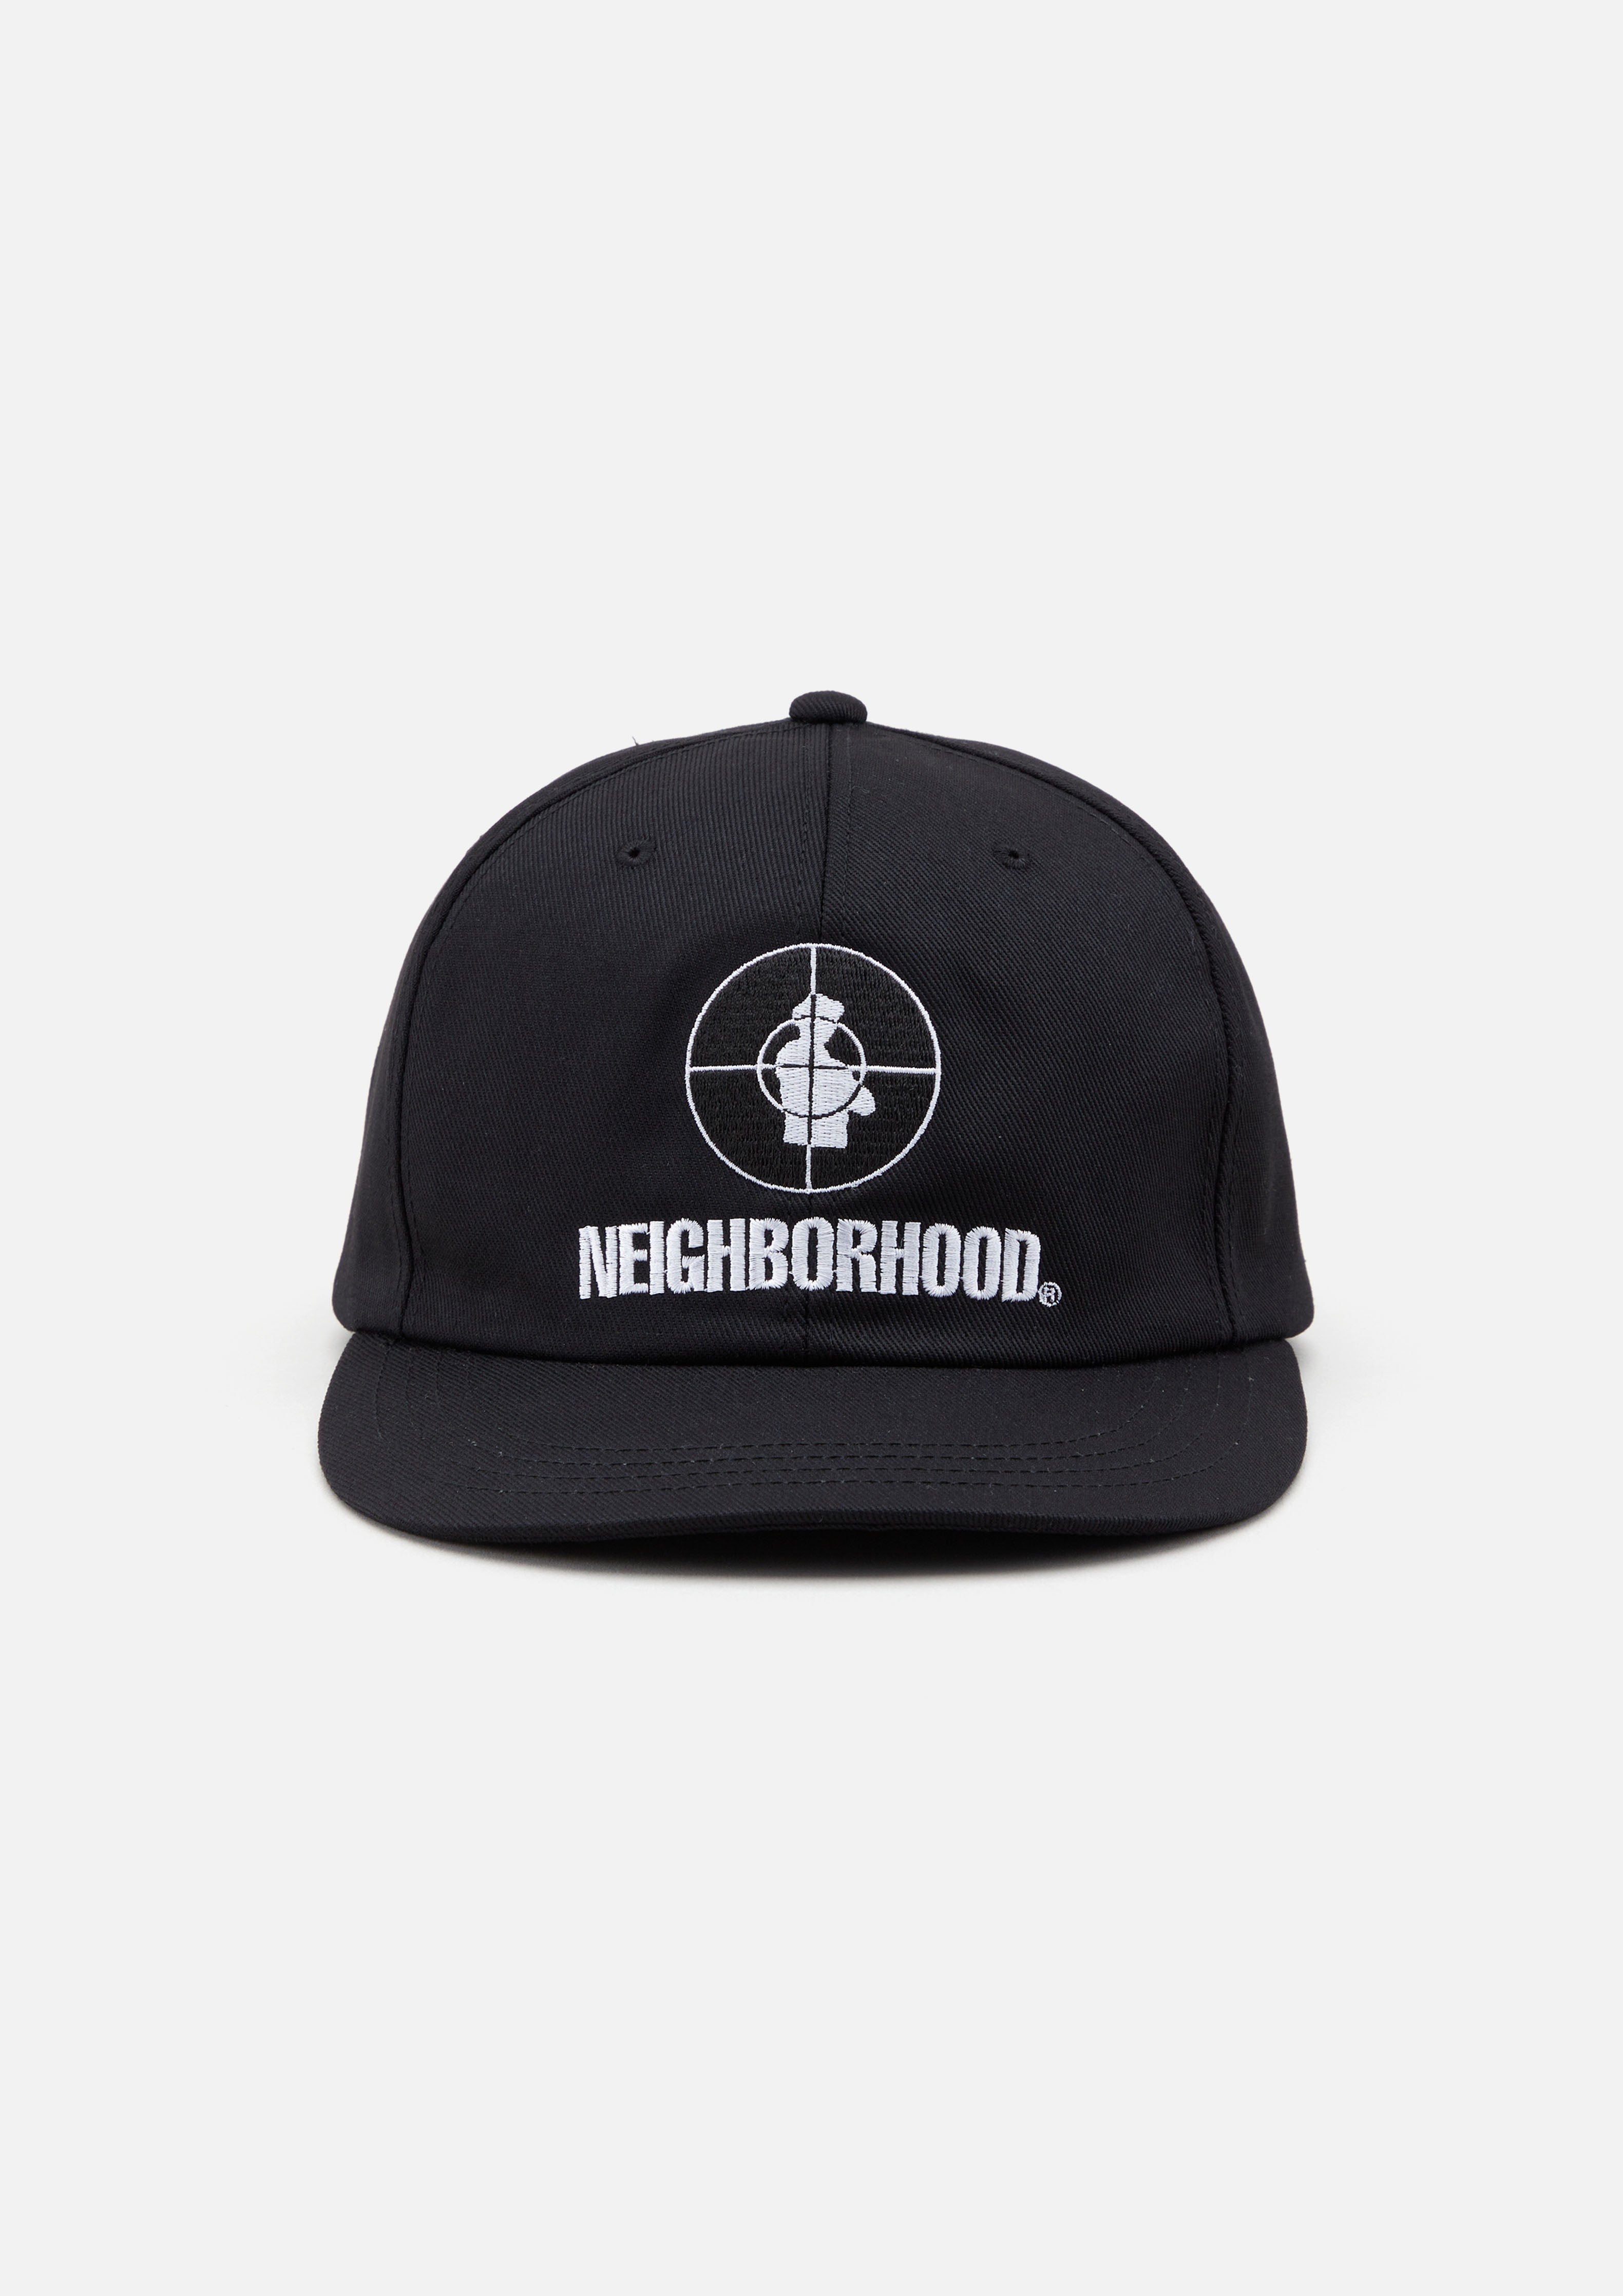 NEIGHBORHOOD X PUBLIC ENEMY BASEBALL CAP - キャップ